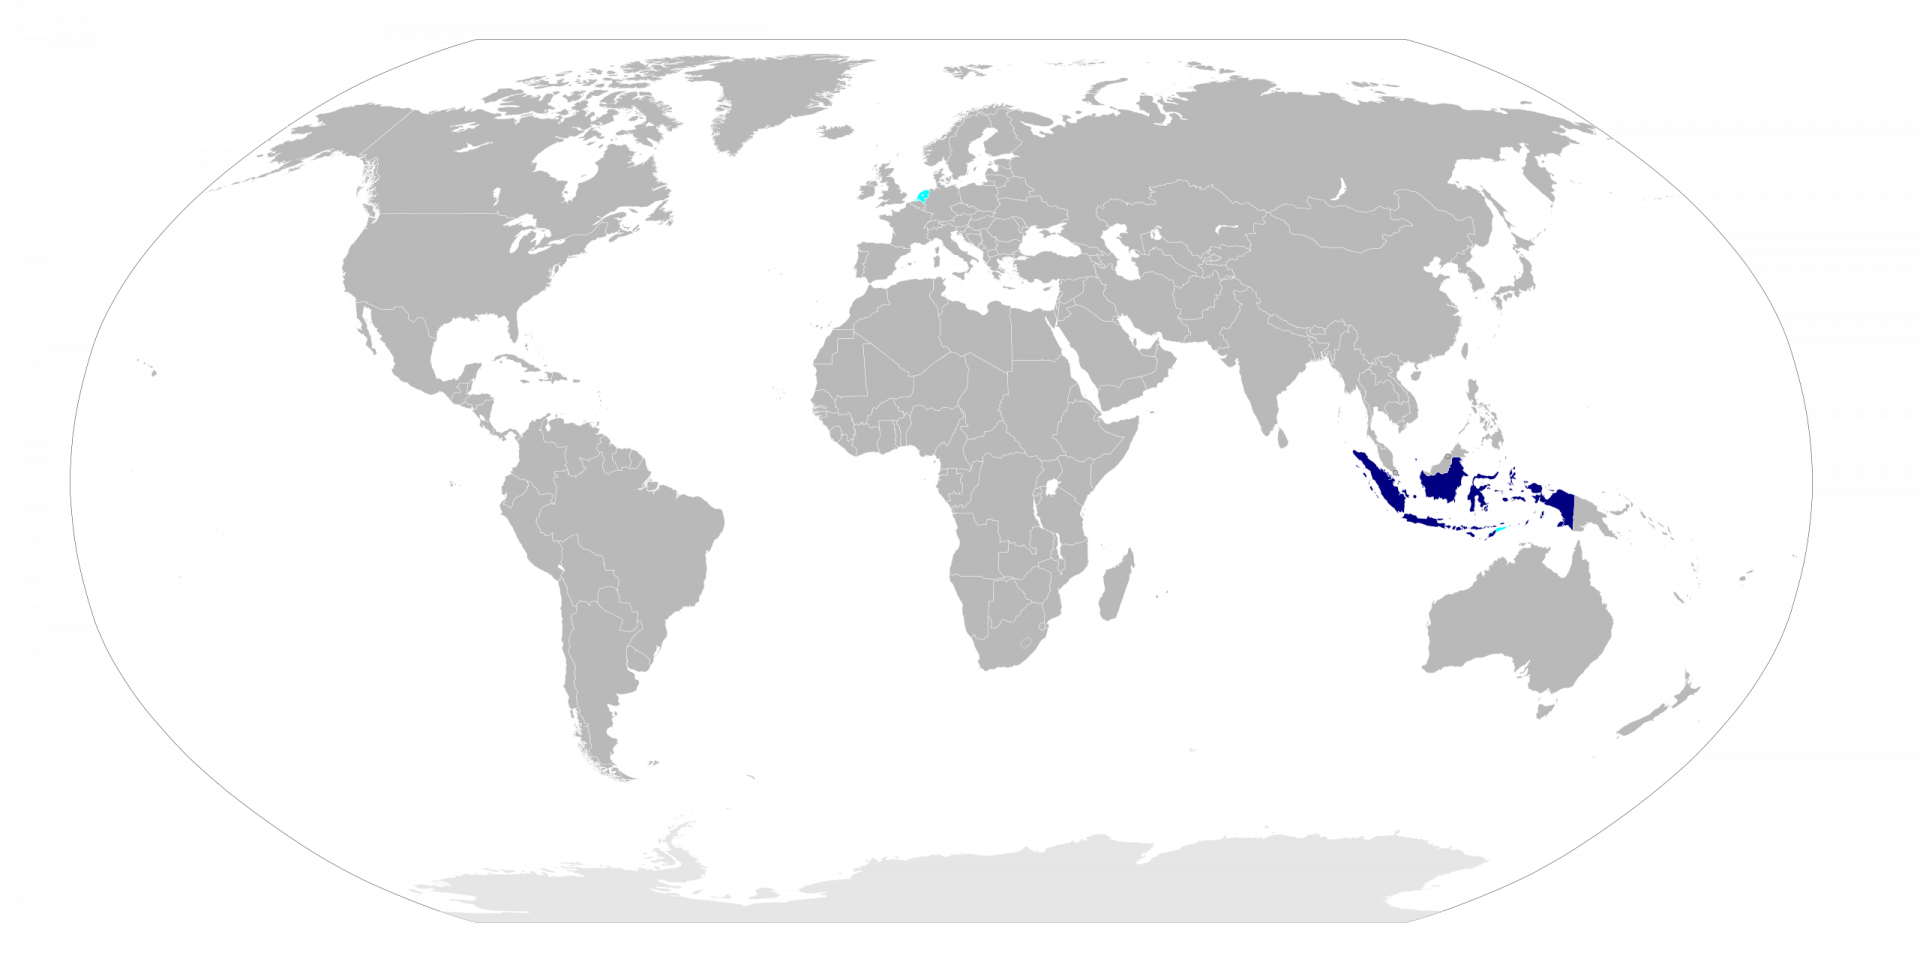 indonesian language chart